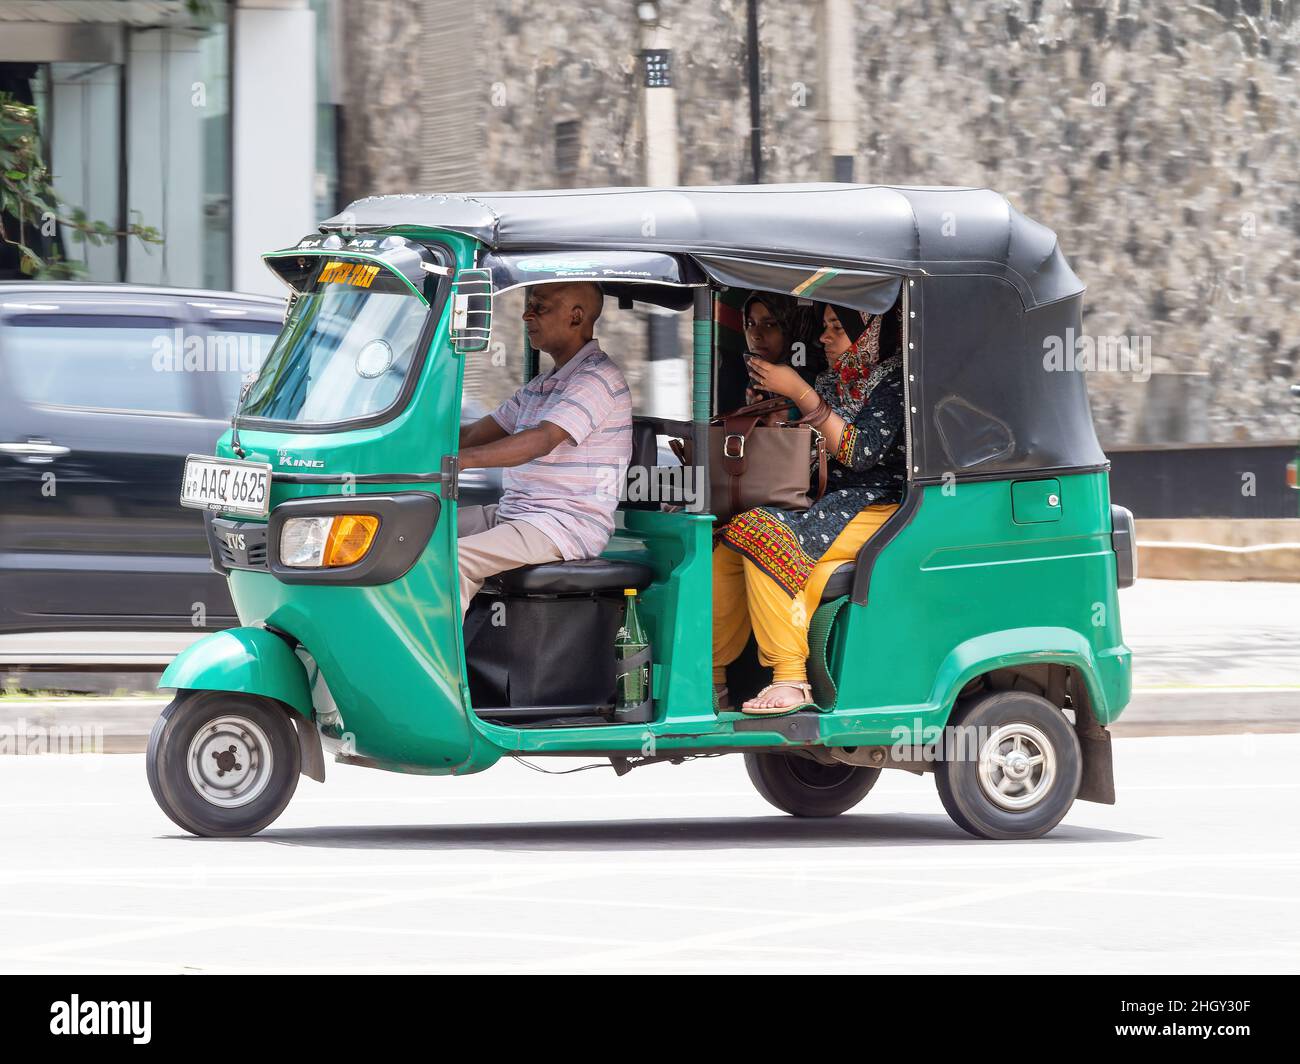 Green auto rickshaw, also called tuk-tuk, with two female passengers, in Colombo, Sri Lanka Stock Photo